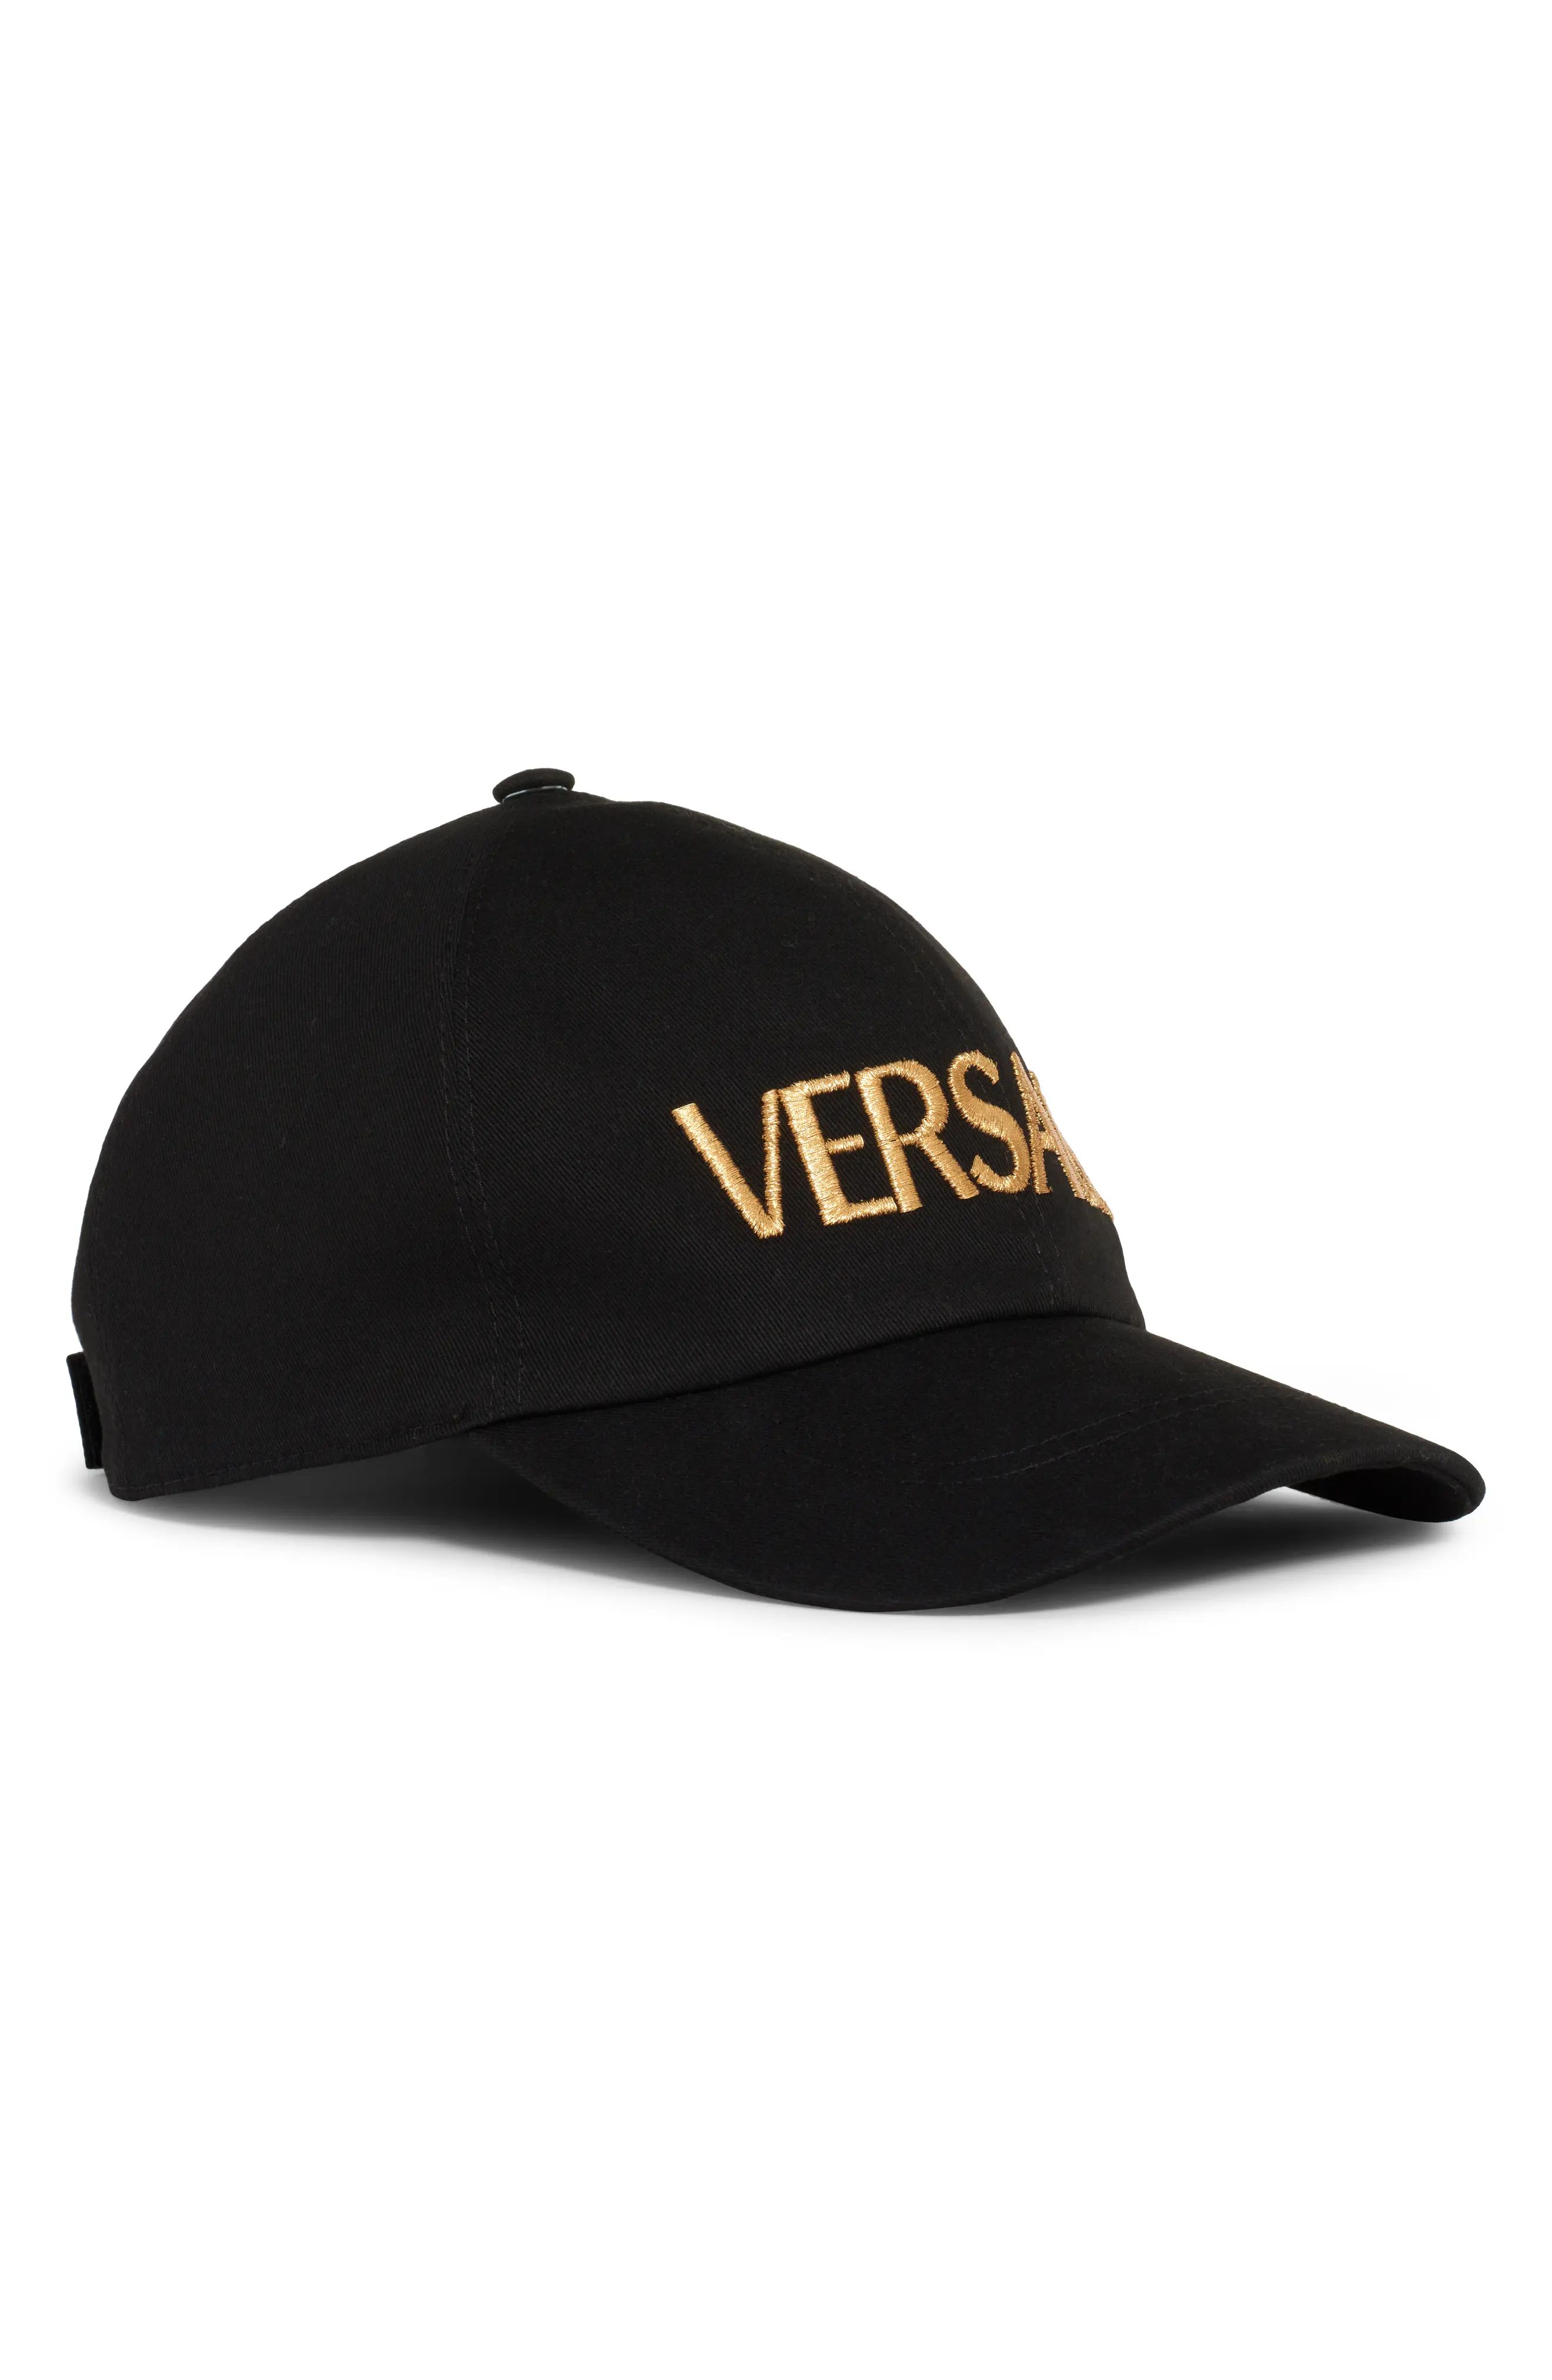 Versace Metallic Logo Baseball Cap in Nero/Oro at Nordstrom, Size 59 | Nordstrom